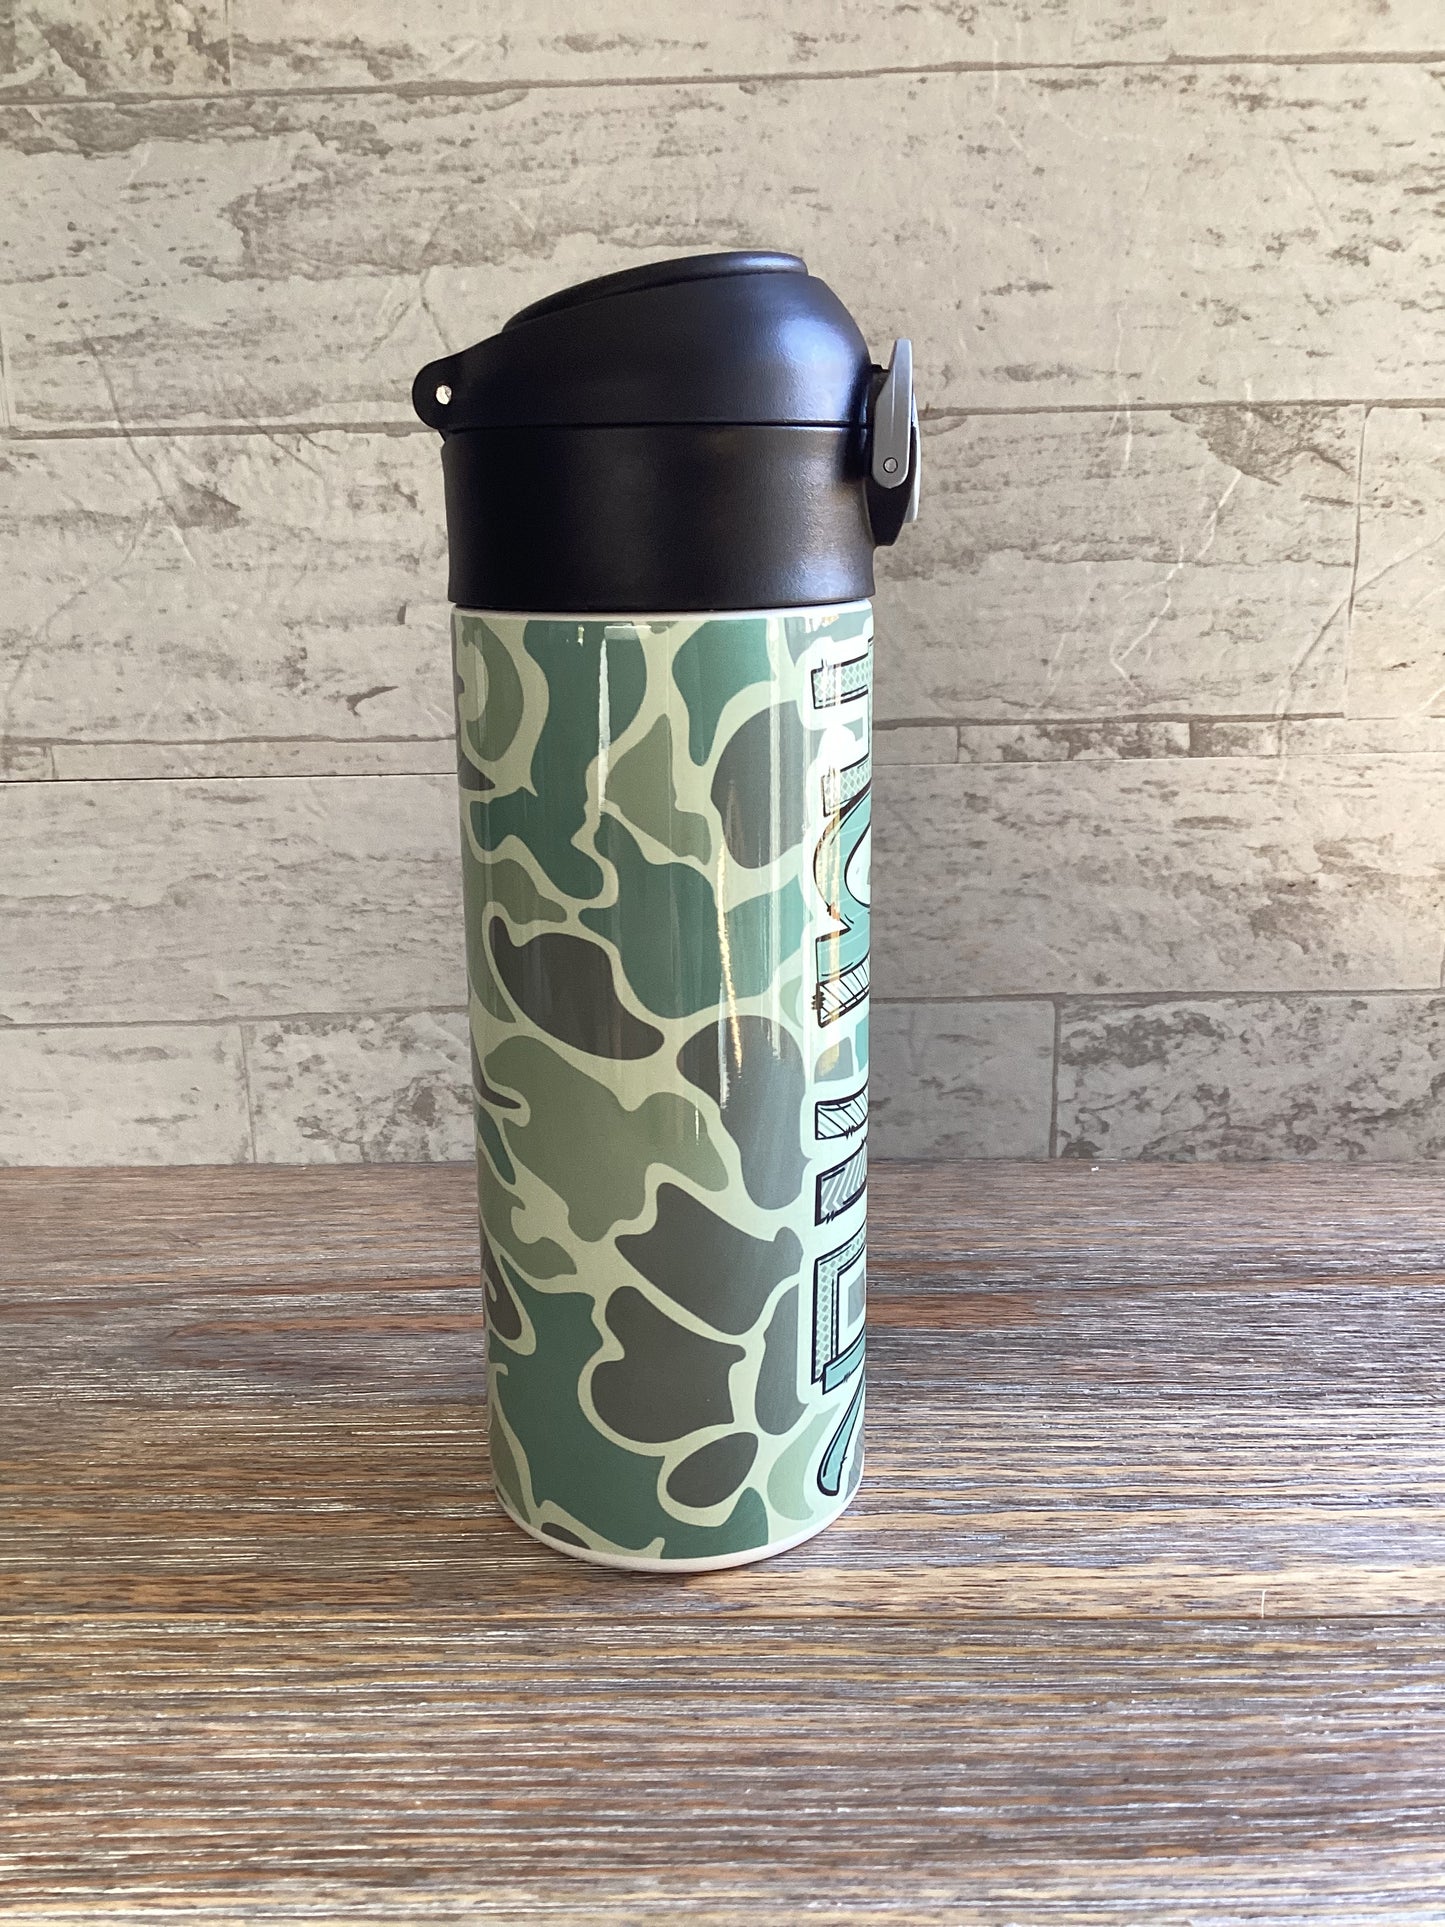 Retro Look Camouflage Flip Top Water Bottle - Personalized